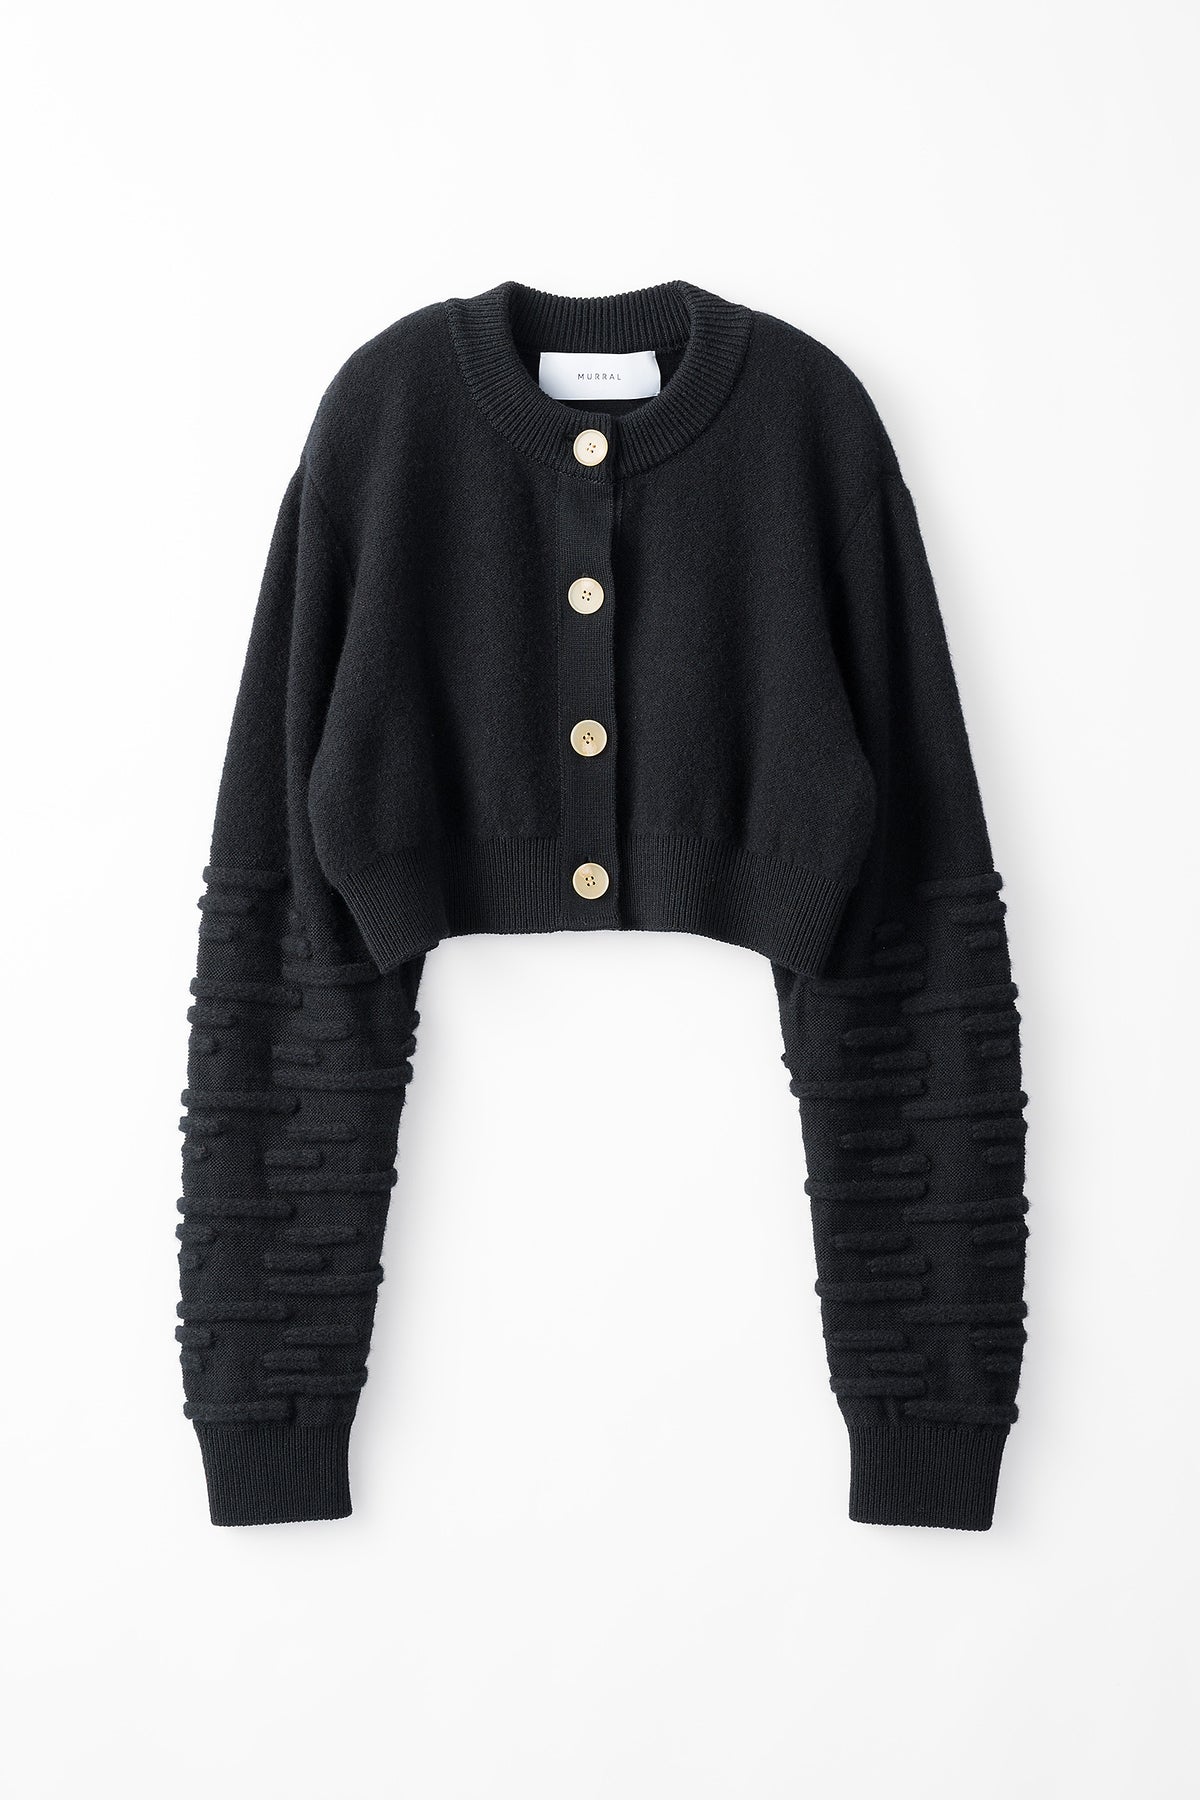 Sway knit short cardigan (Black)